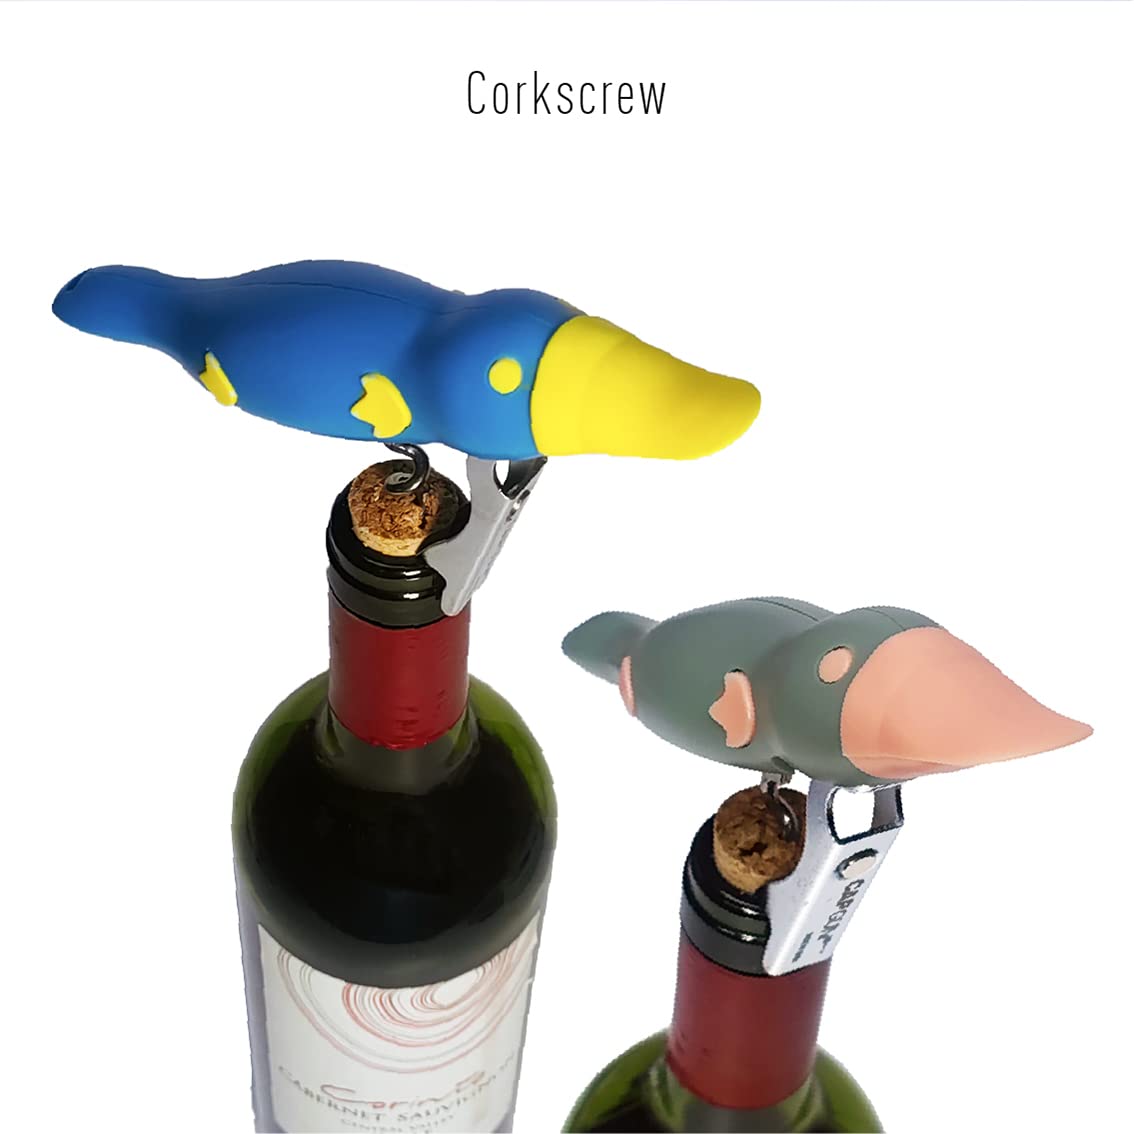 REDIVA Wine Bottle Opener, Unique Platypus Opener for Waiters, Bartenders and Homes (Blue)